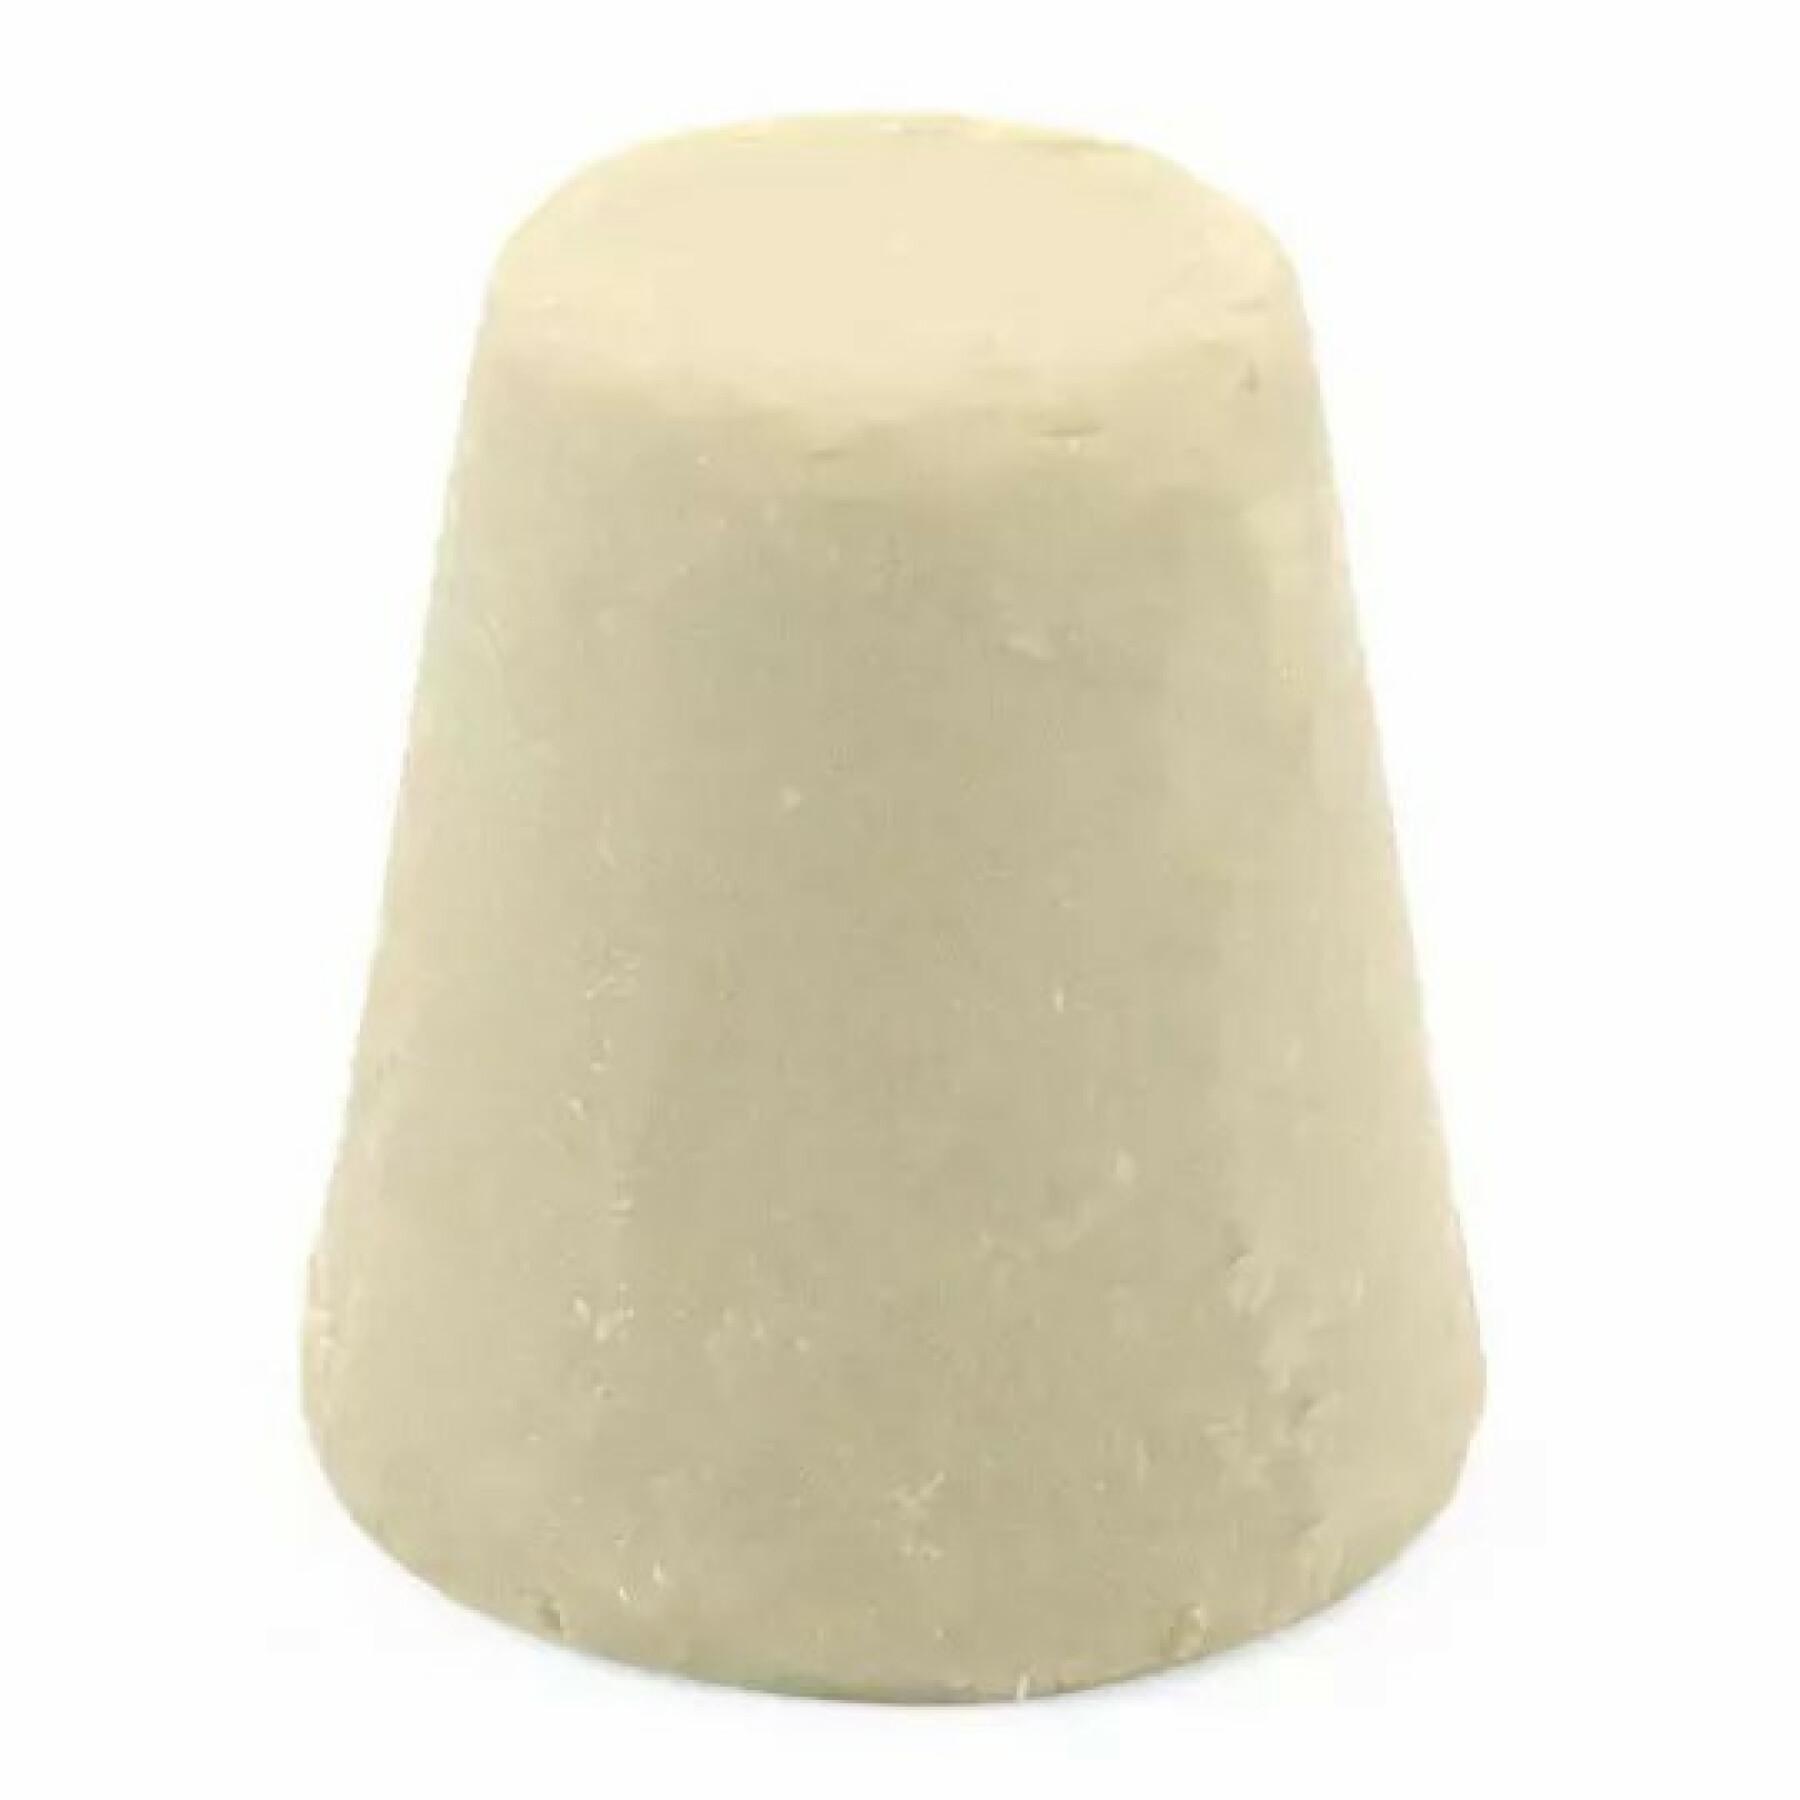 Vaste deodorant - salie ceder ravintsara Lamazuna (30 ml)